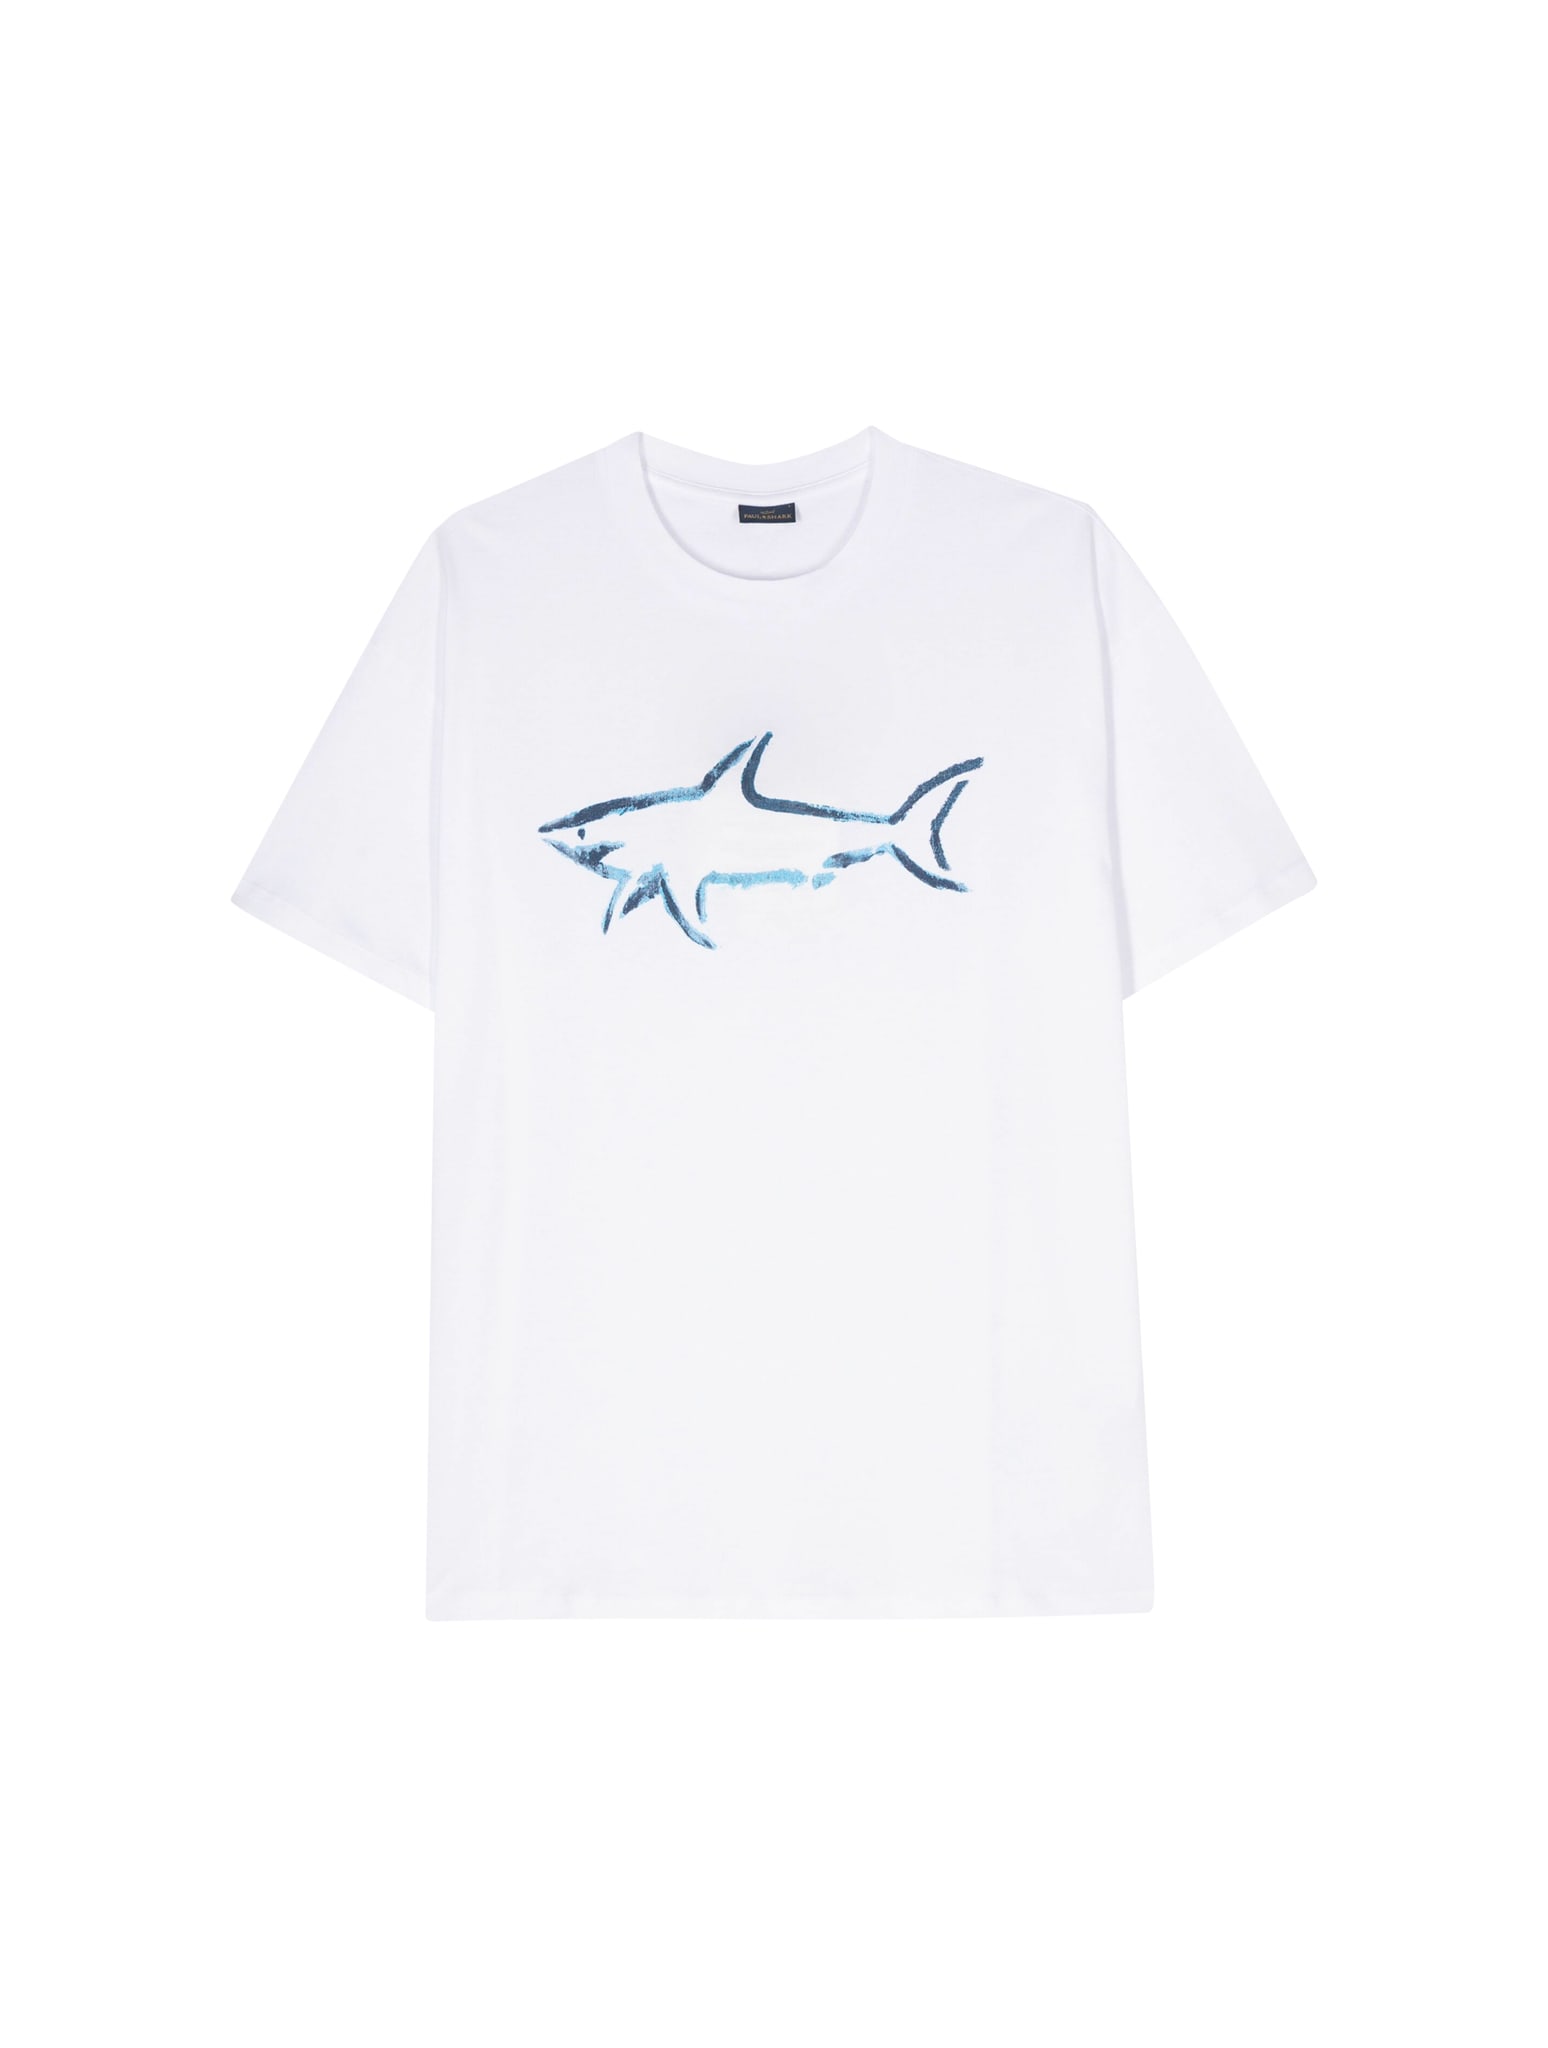 Paul&amp;shark T-shirt Cotton In White/blue